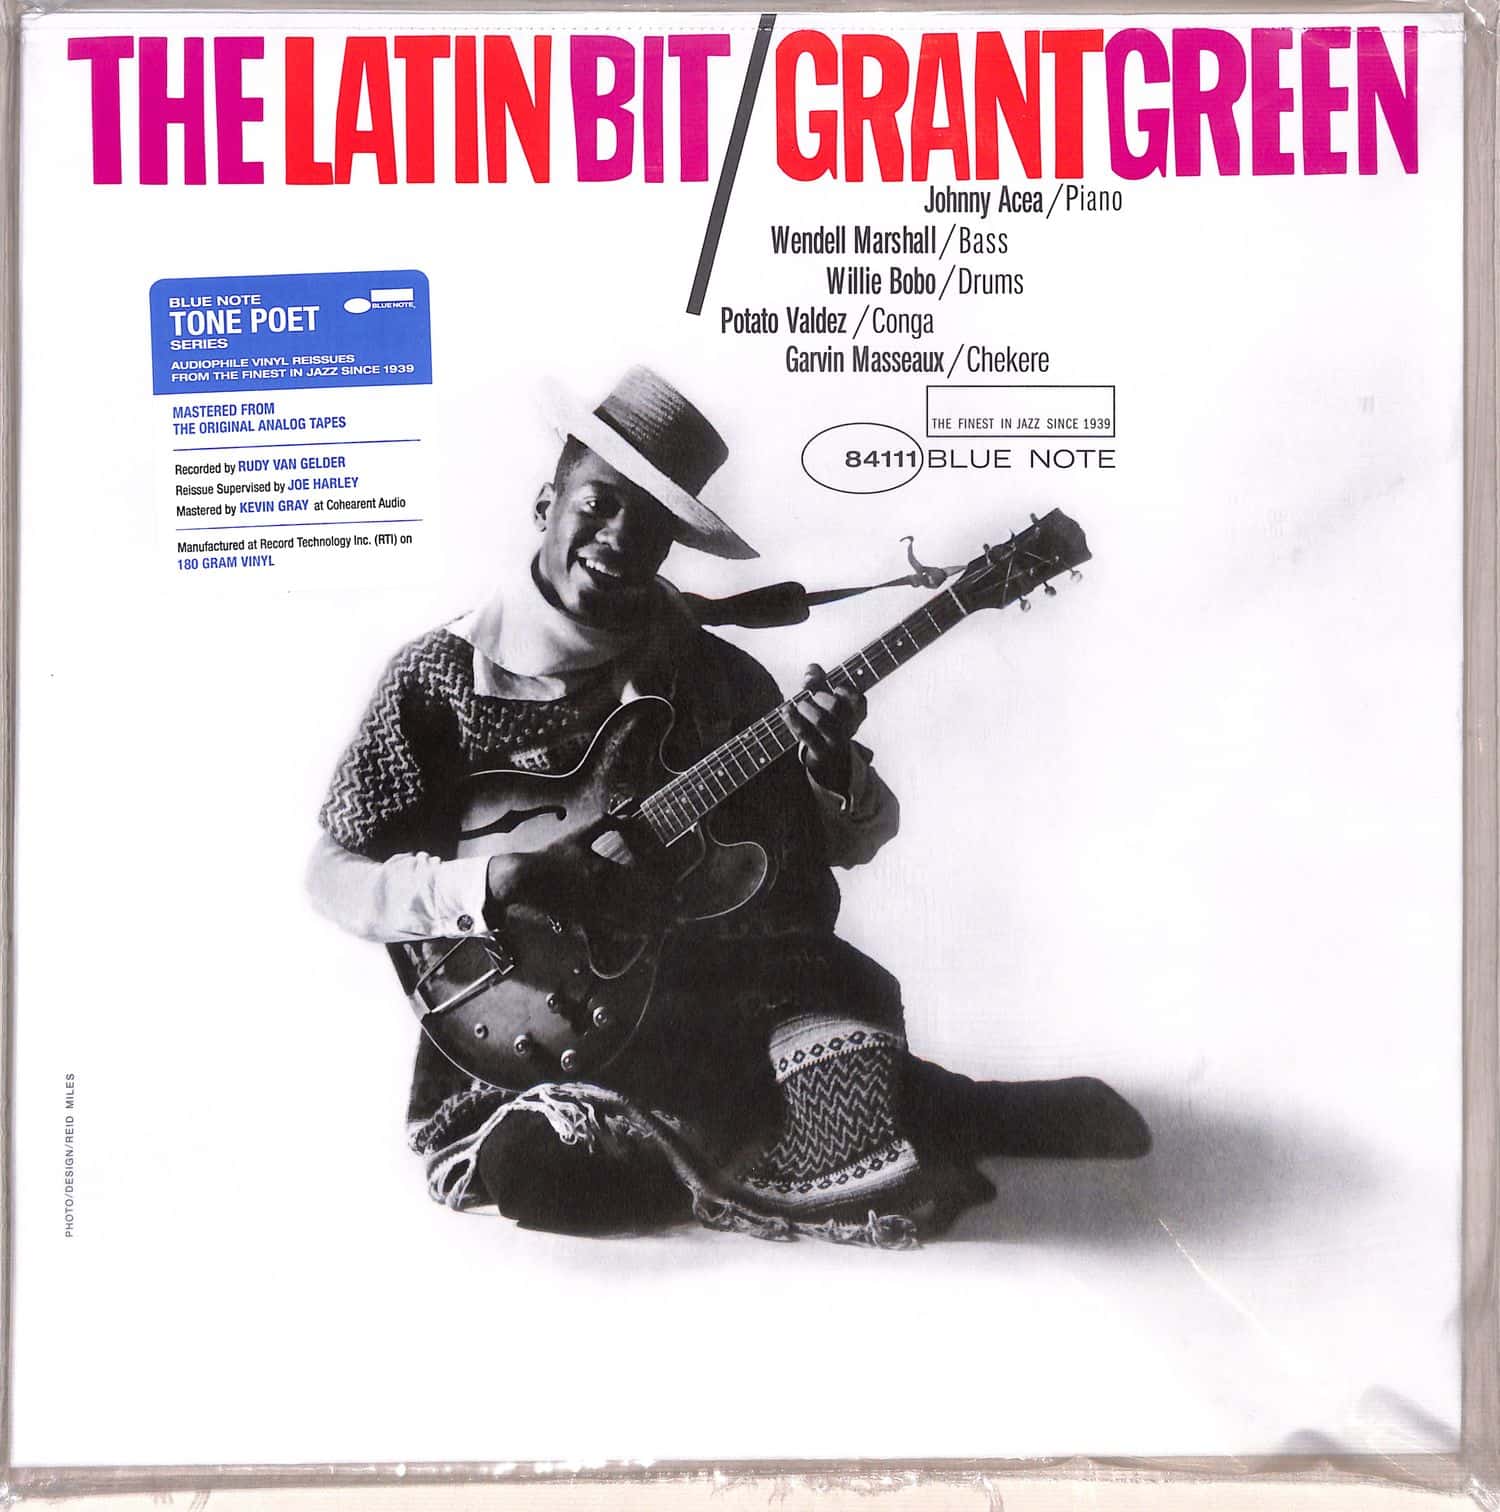 Grant Green - THE LATIN BIT 